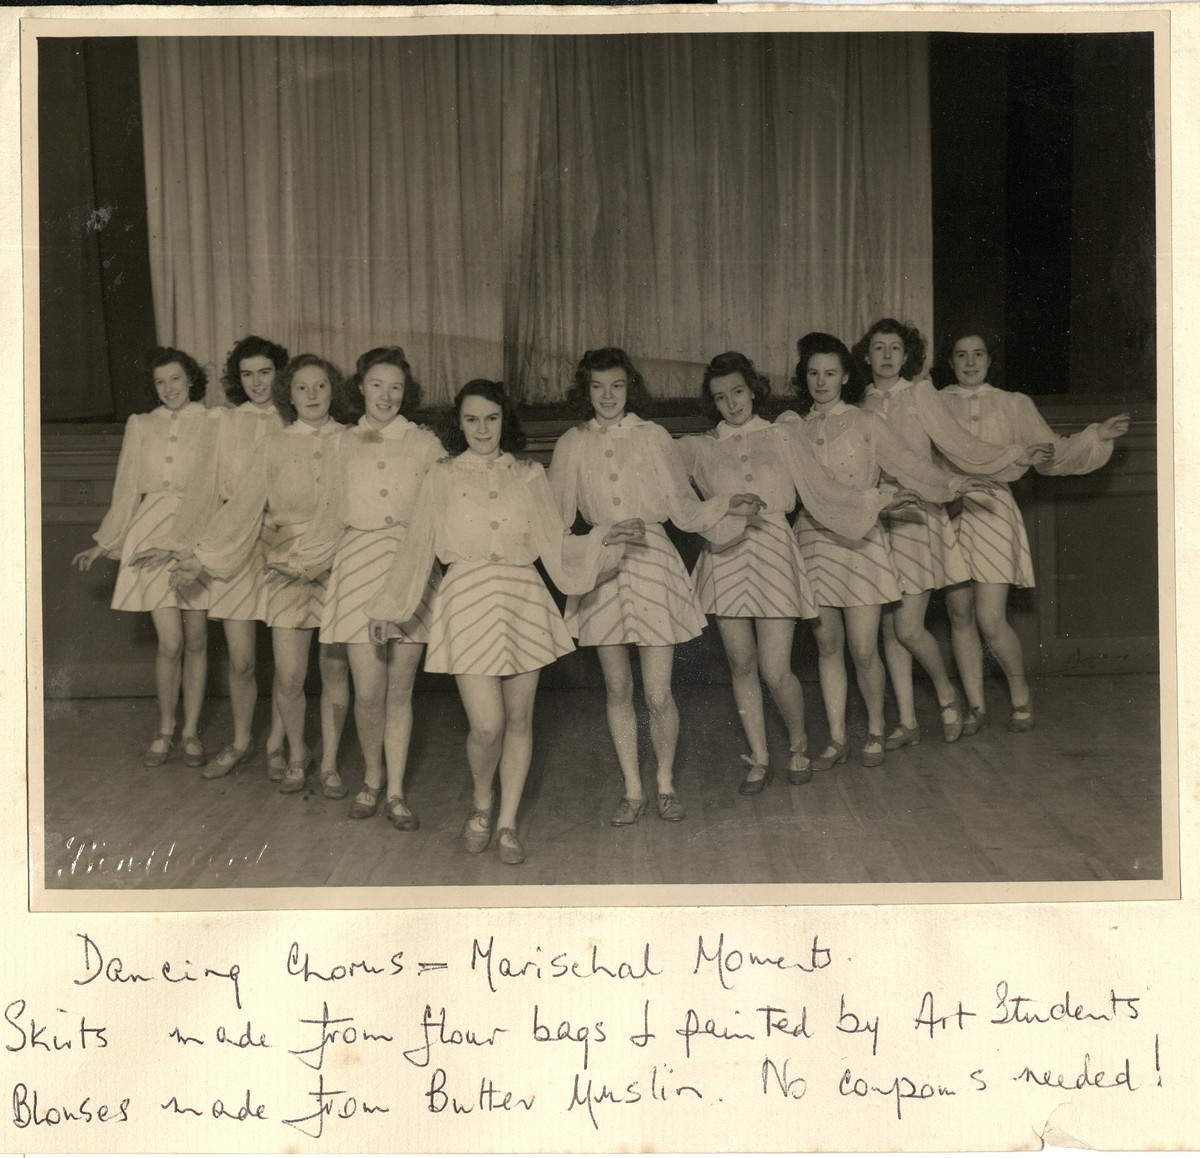 Dancing chorus from Marischal Moments photograph